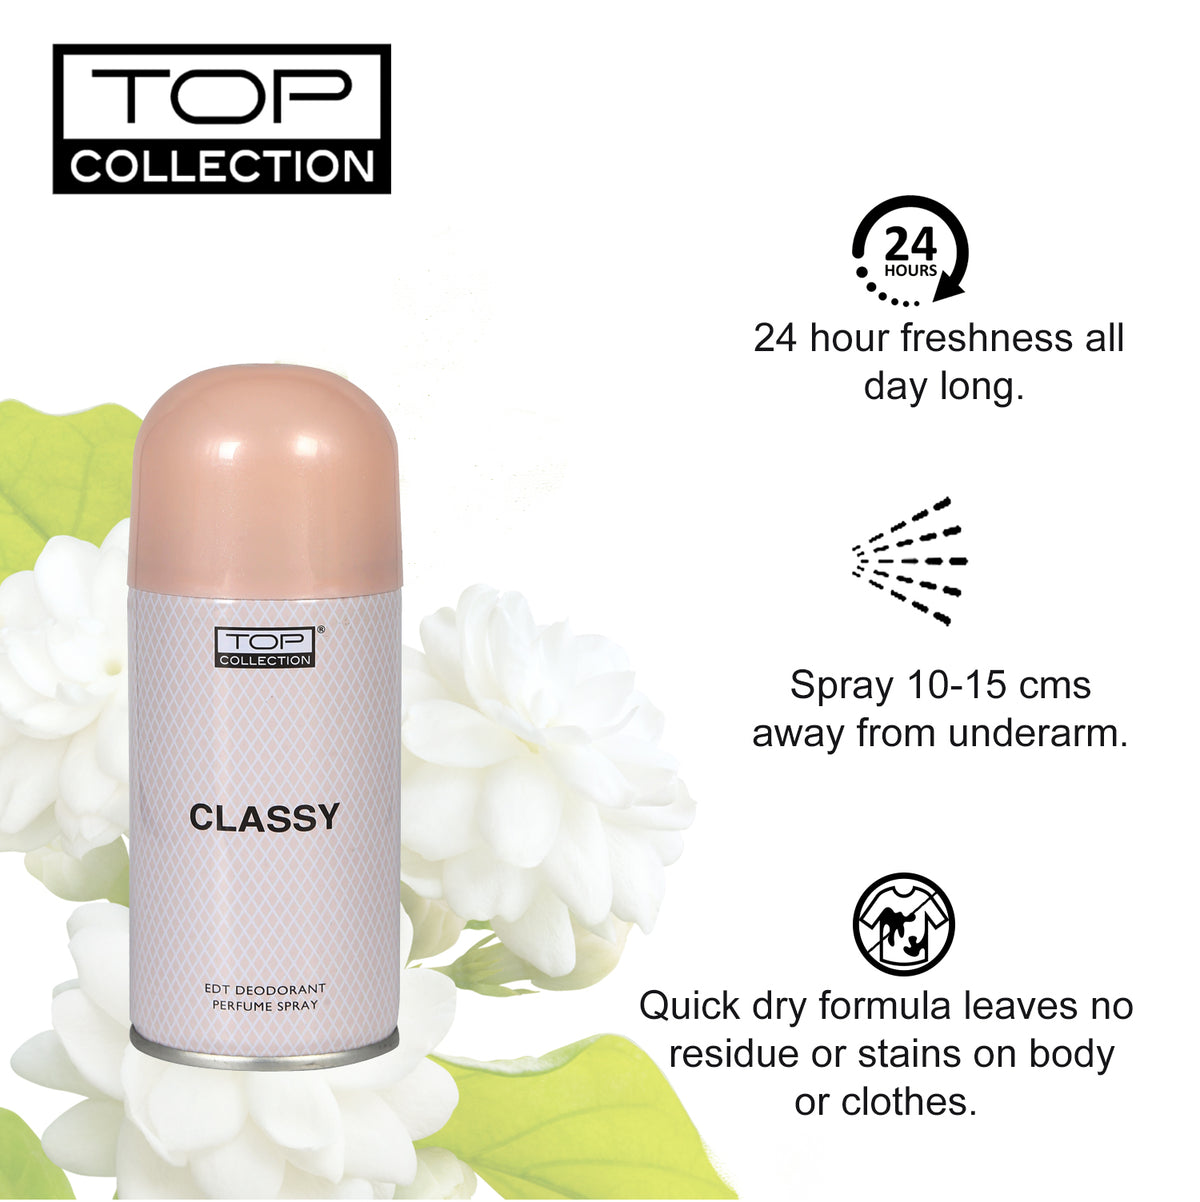 Top Collection Eau De Toilette Deodrant Perfume Spray - Classy, 150ml